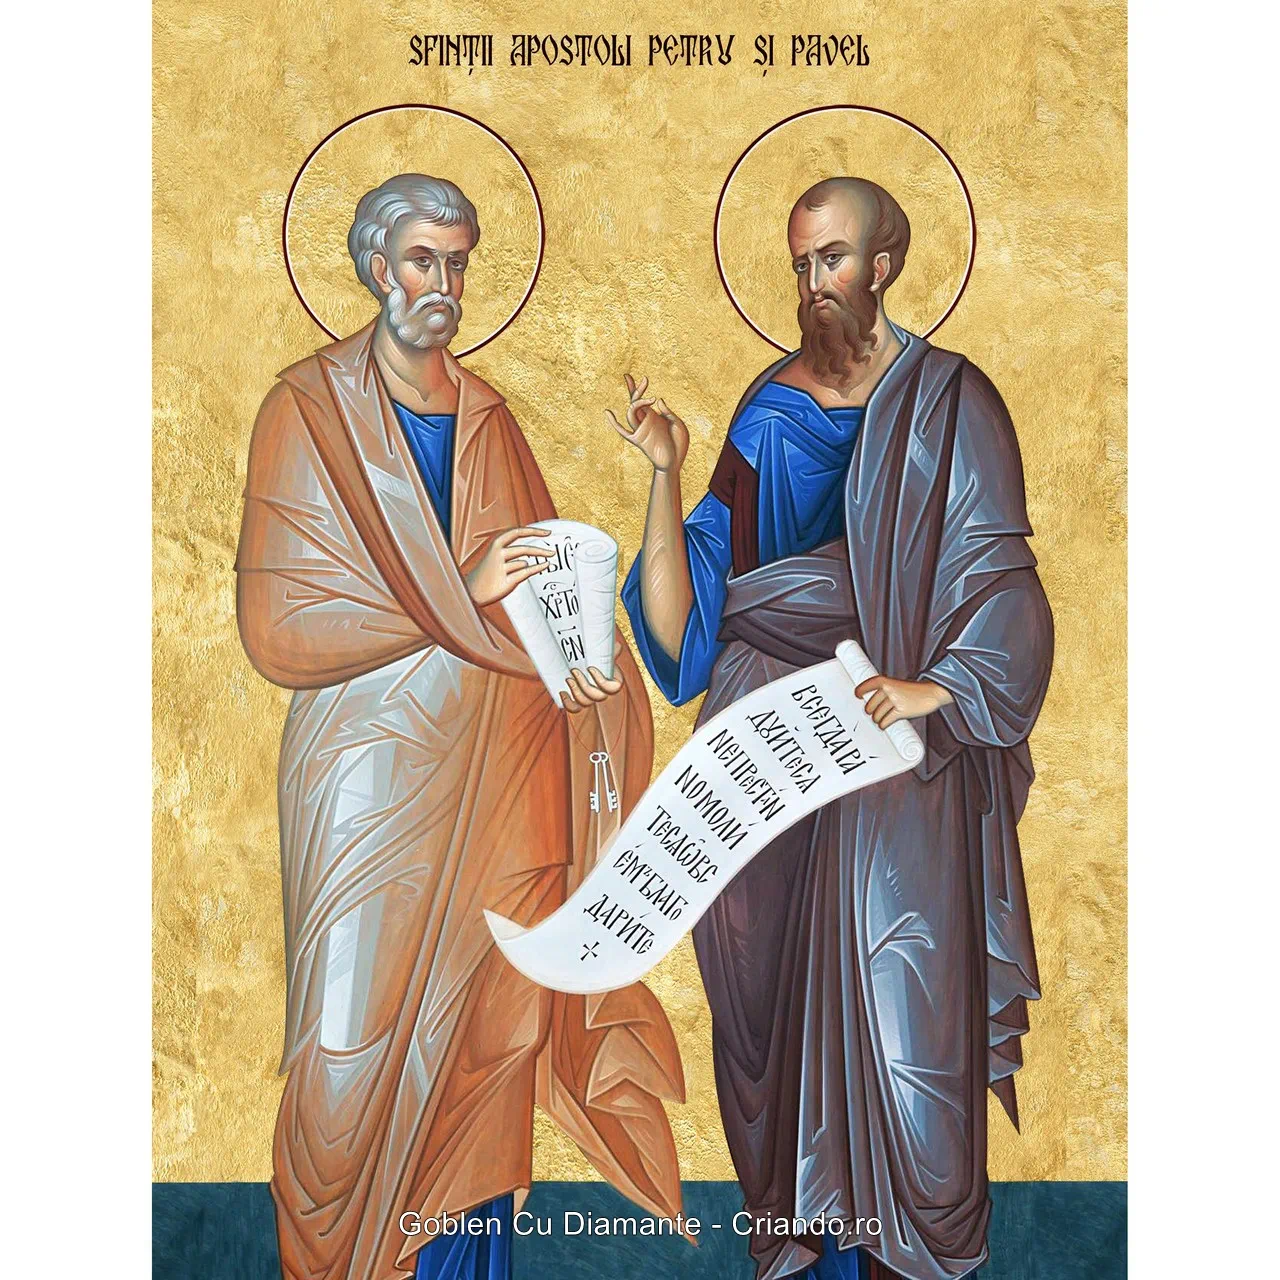 Goblen cu Diamante patrate, 40x50 cm, Sfintii Apostoli Petru şi Pavel 29 Iunie, GBN-198